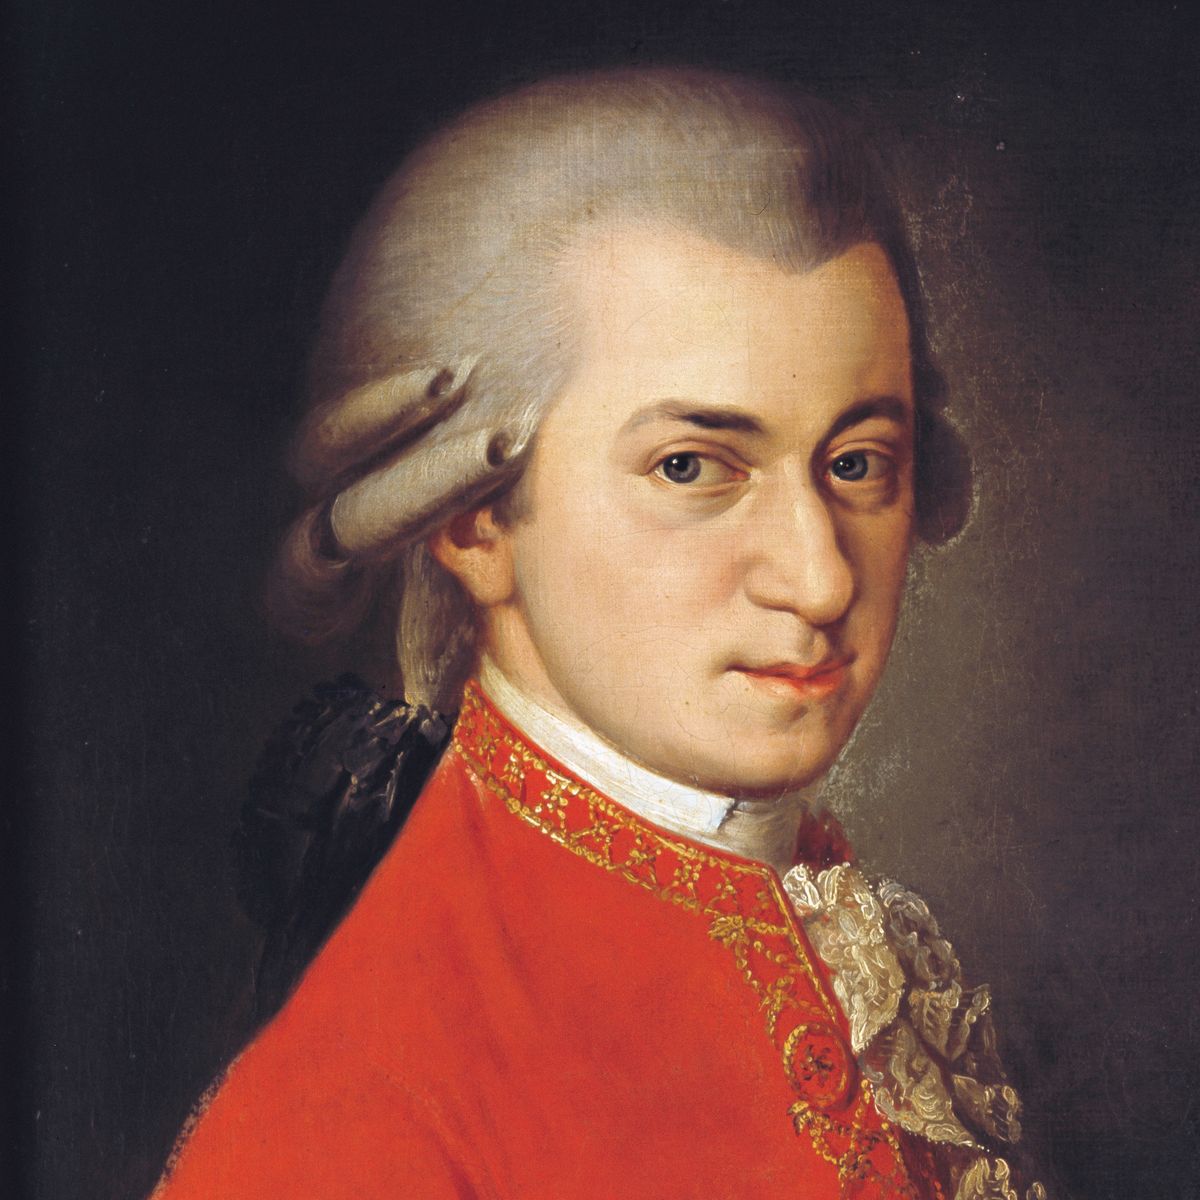 Wolfgang Amadeus MozartAUSTRIA - JANUARY 01: Wolfgang Amadeus Mozart. 1819. Canvas by Barbara Krafft (1764-1825). (Photo by Imagno/Getty Images) [Wolfgang Amadeus Mozart. 1819. Gemaelde von Barbara Krafft (1764-1825).]